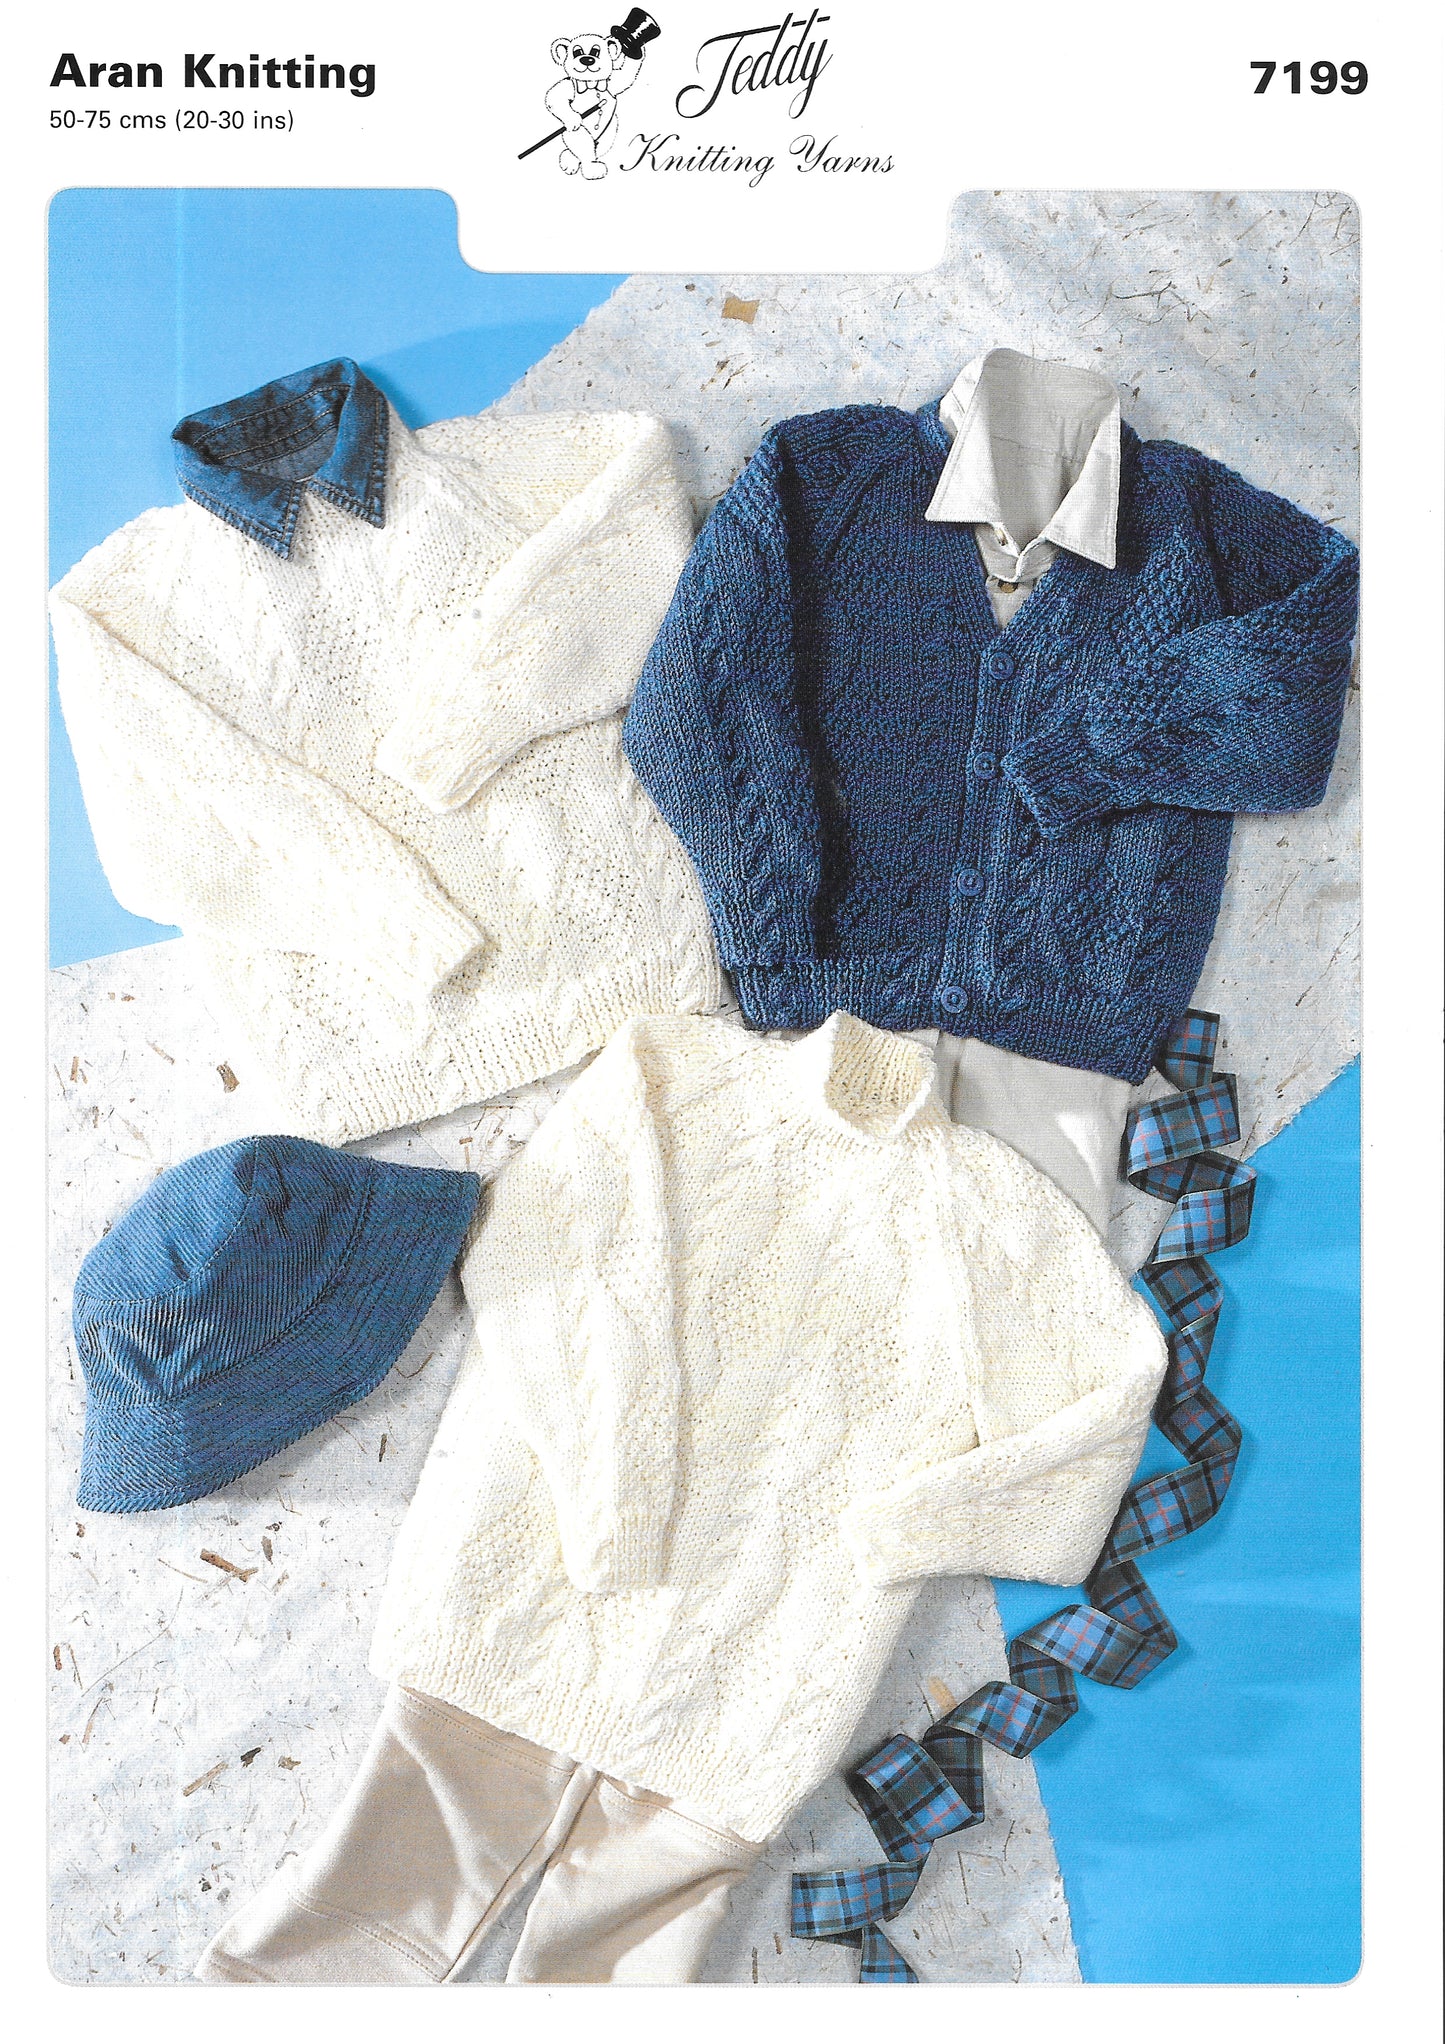 7199 Teddy knitting pattern. Child's cardigans/sweaters.  Aran